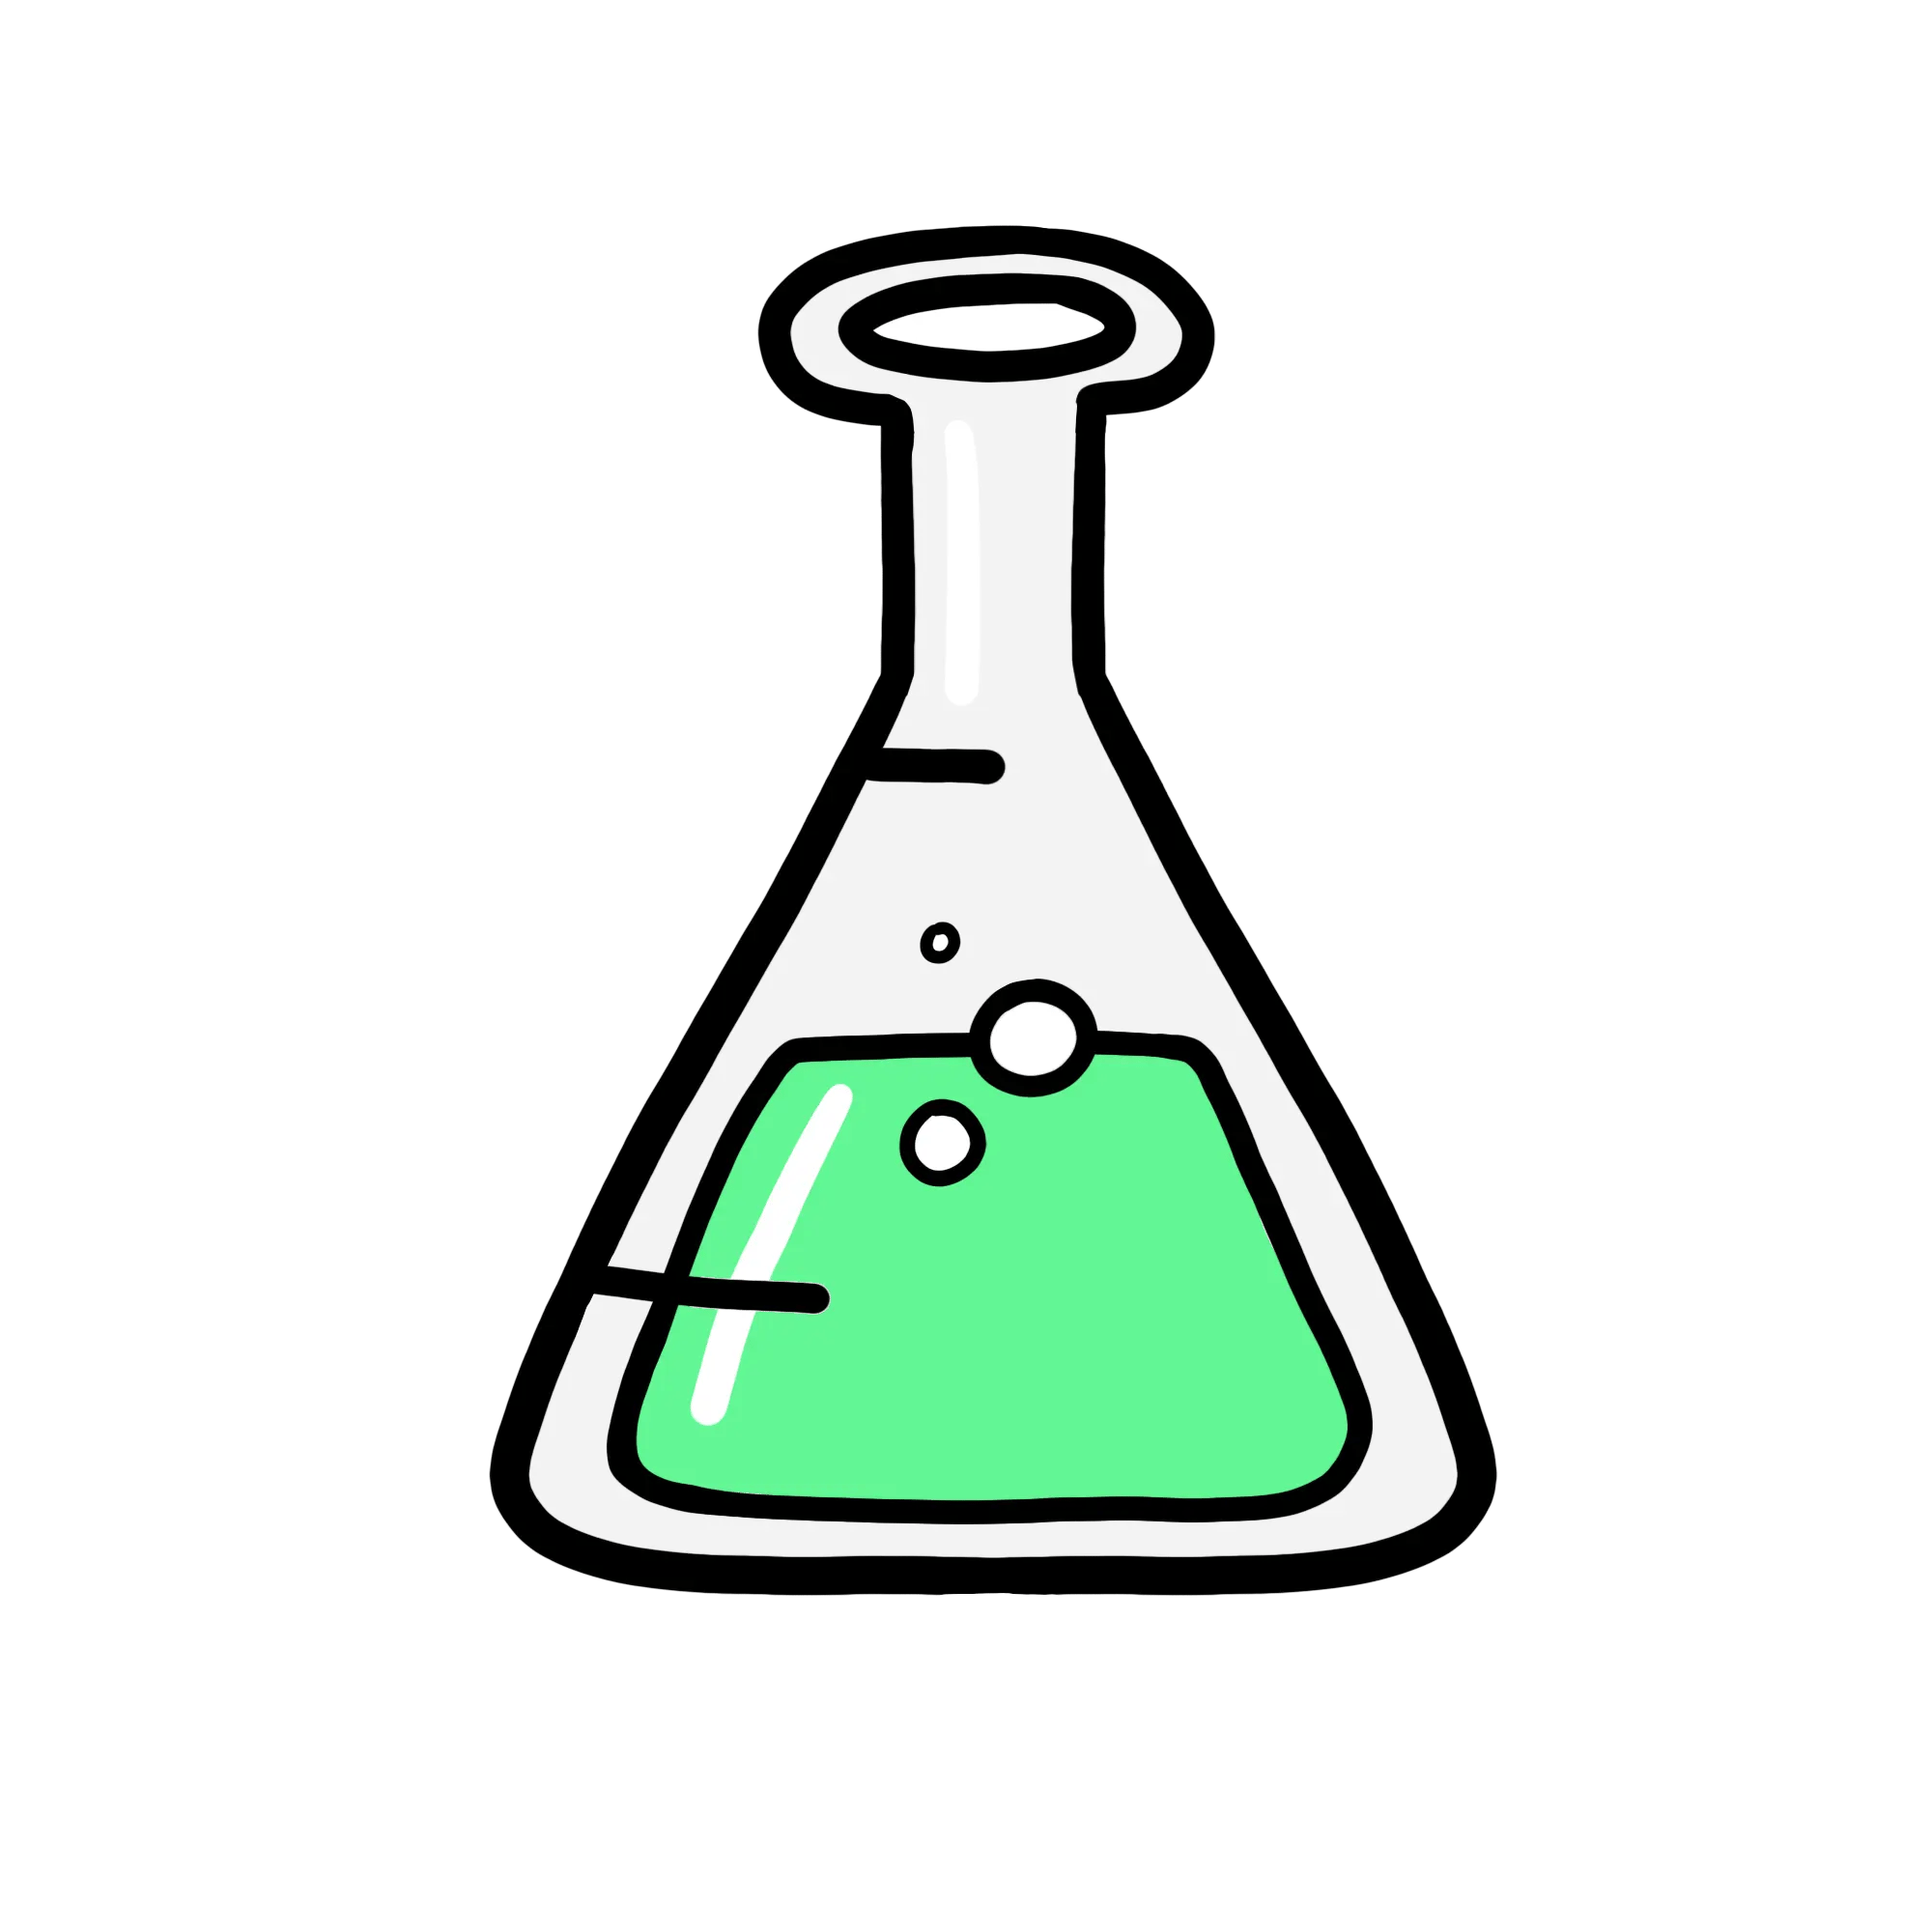 a beaker with a green liquid